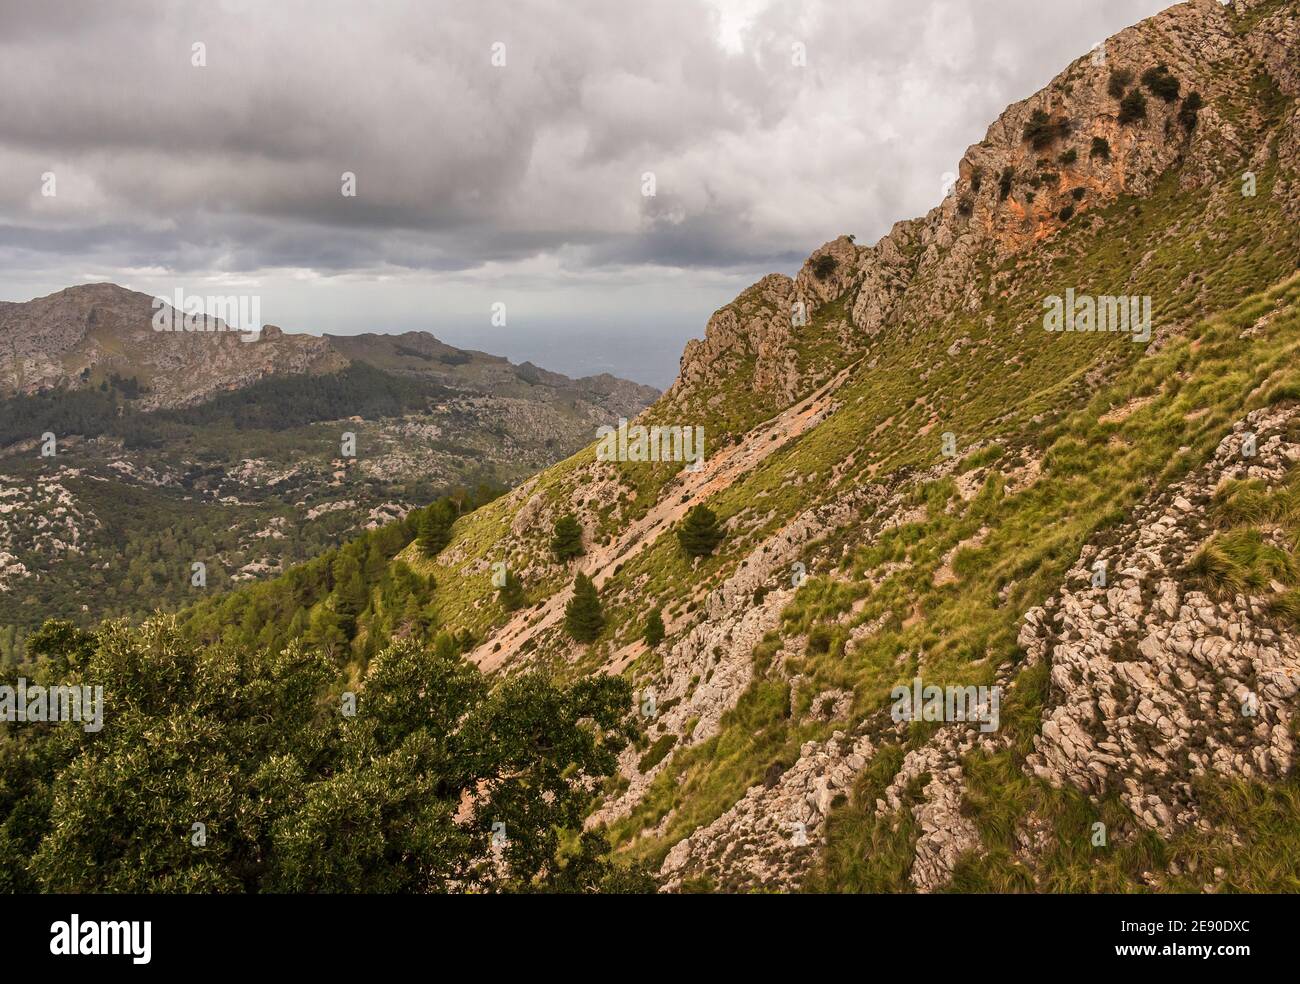 Mountain landscape below cloudy sky. Escorca. Serra de Tramuntana. Mallorca Island. Spain. Stock Photo